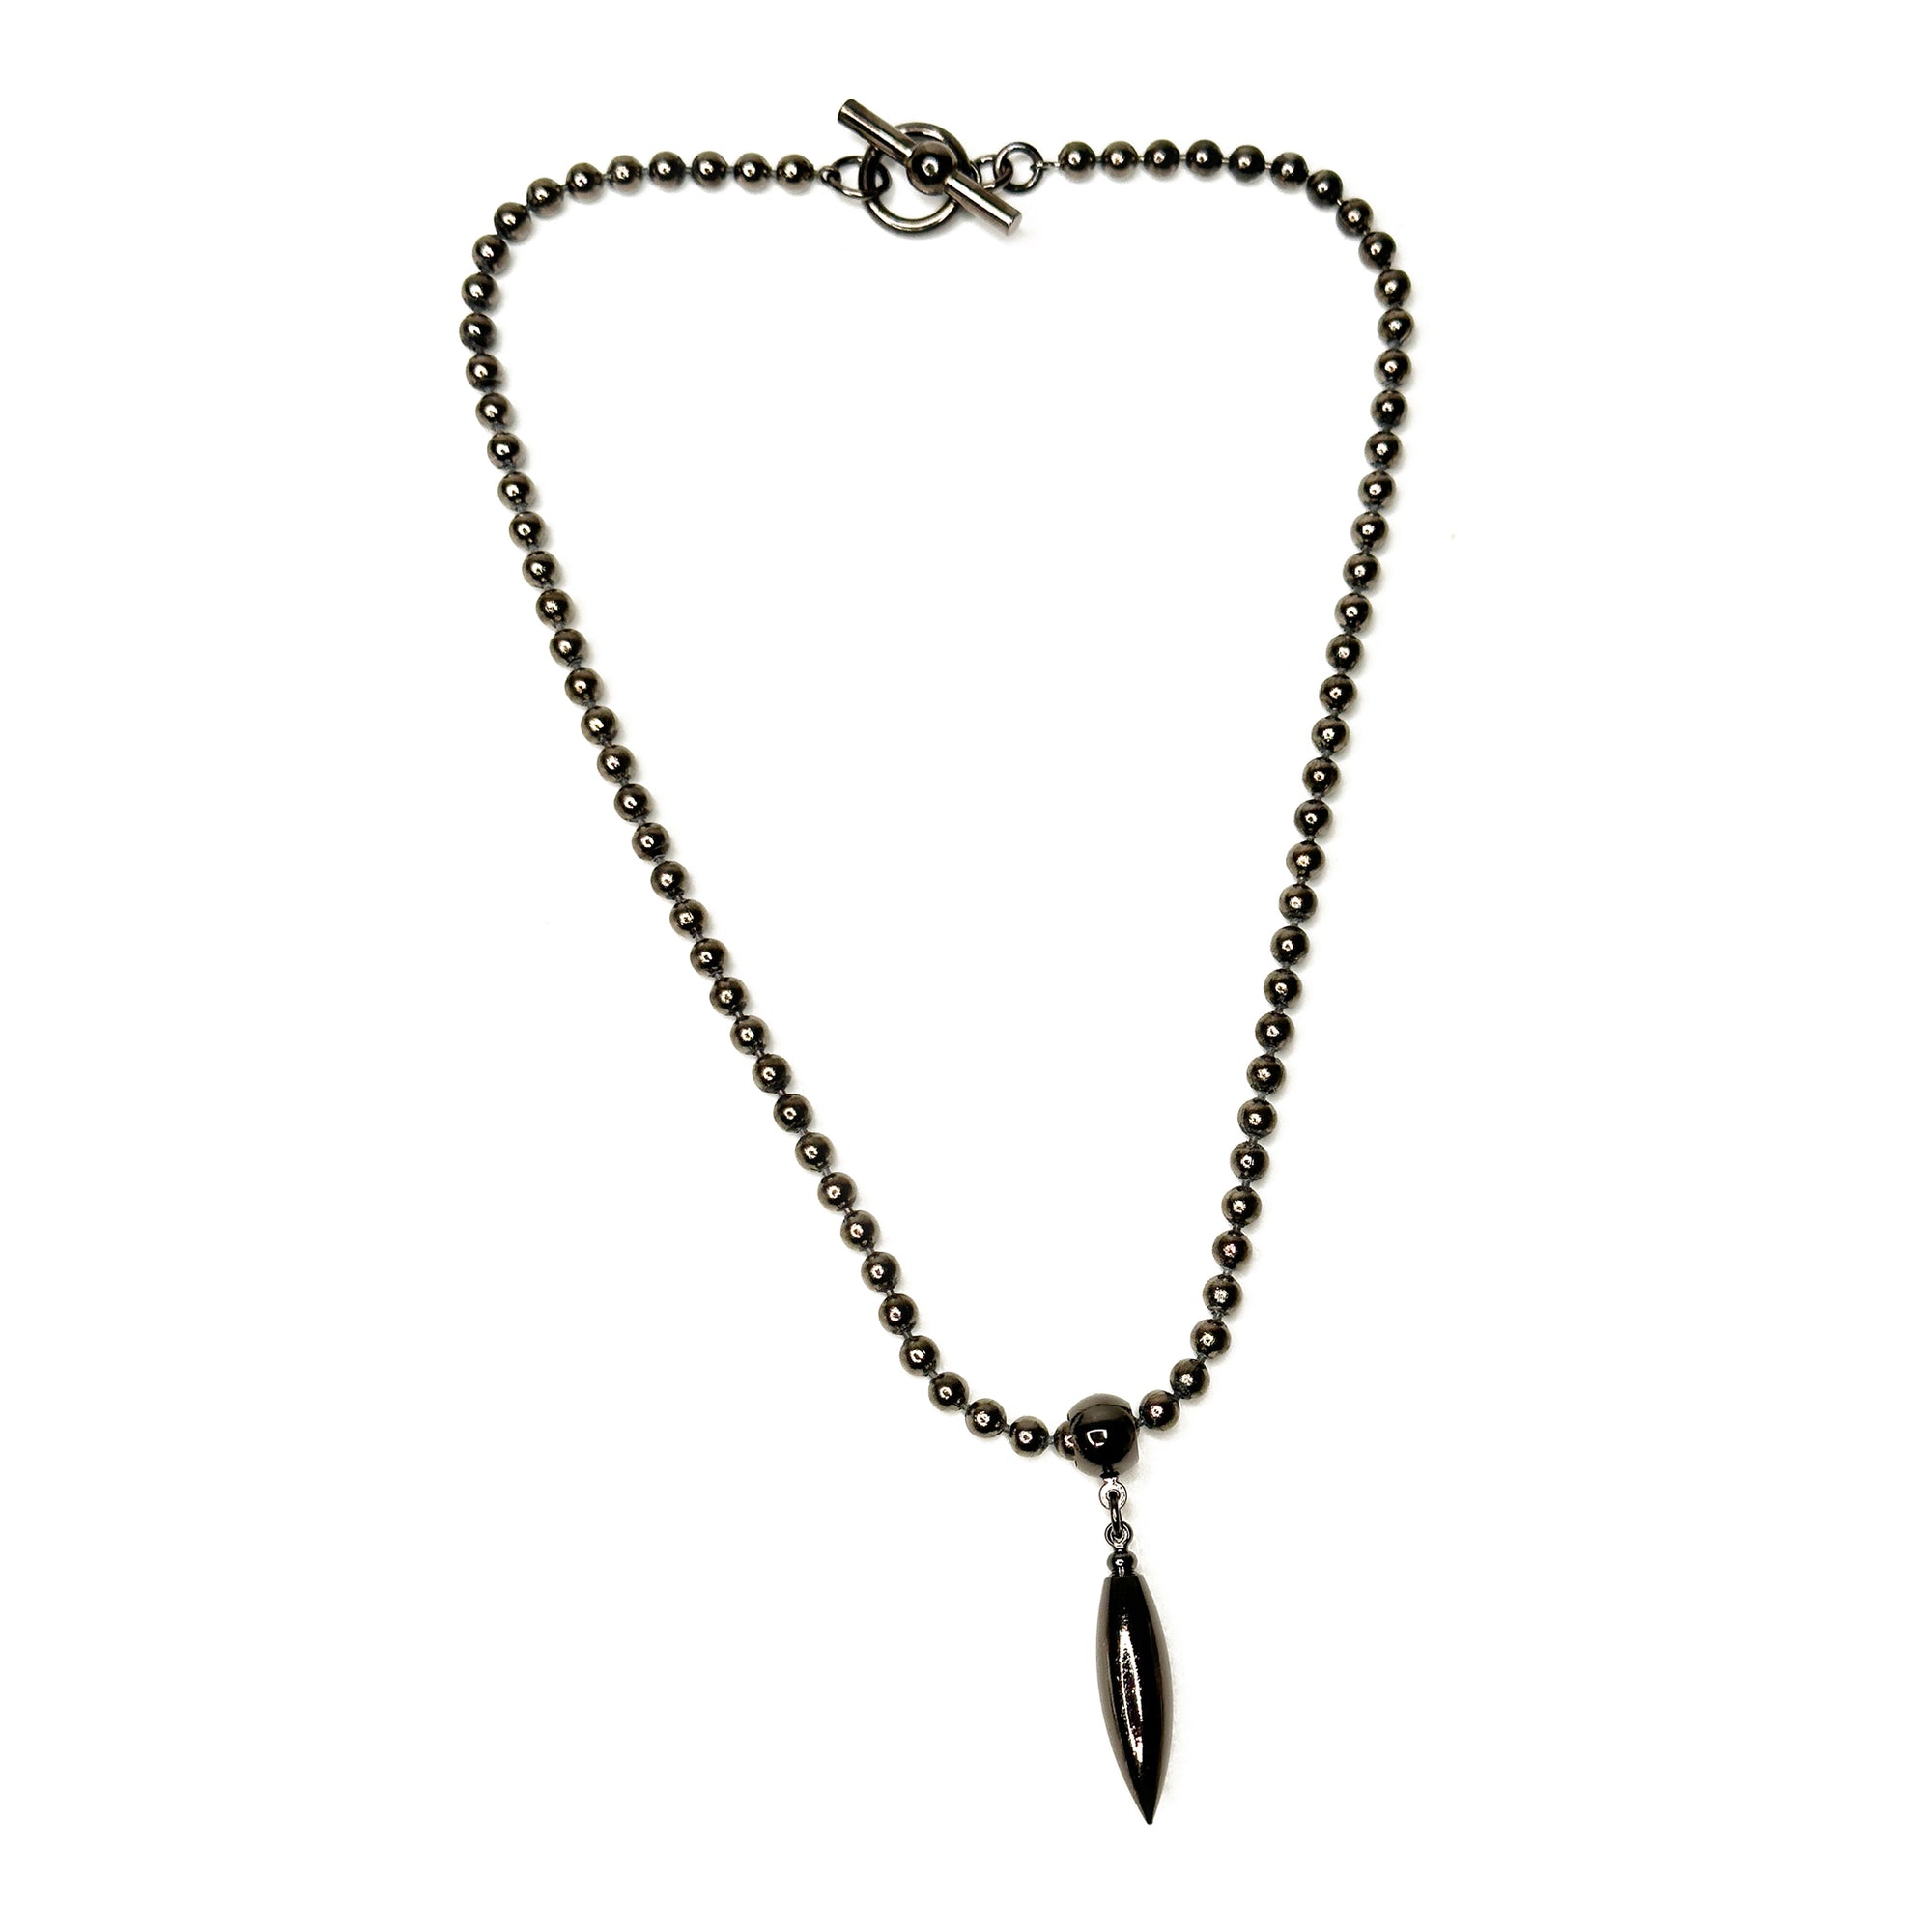 Pendulum Drop Bead Chain Necklace